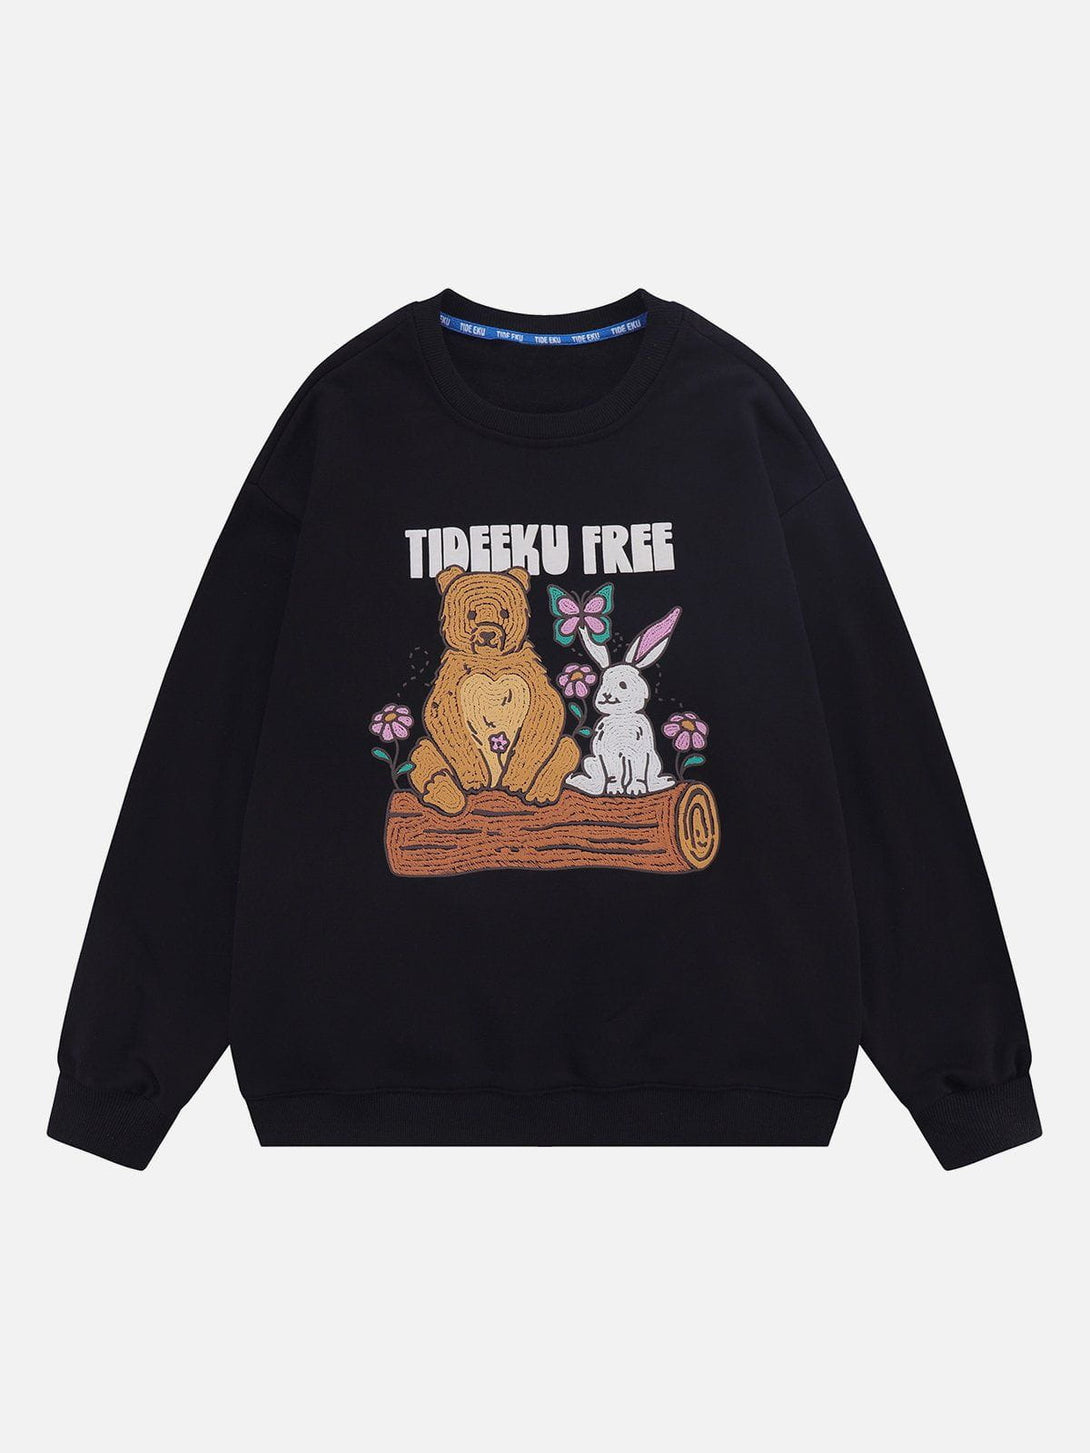 Levefly - Embroidery Bear Rabbit Sweatshirt - Streetwear Fashion - levefly.com